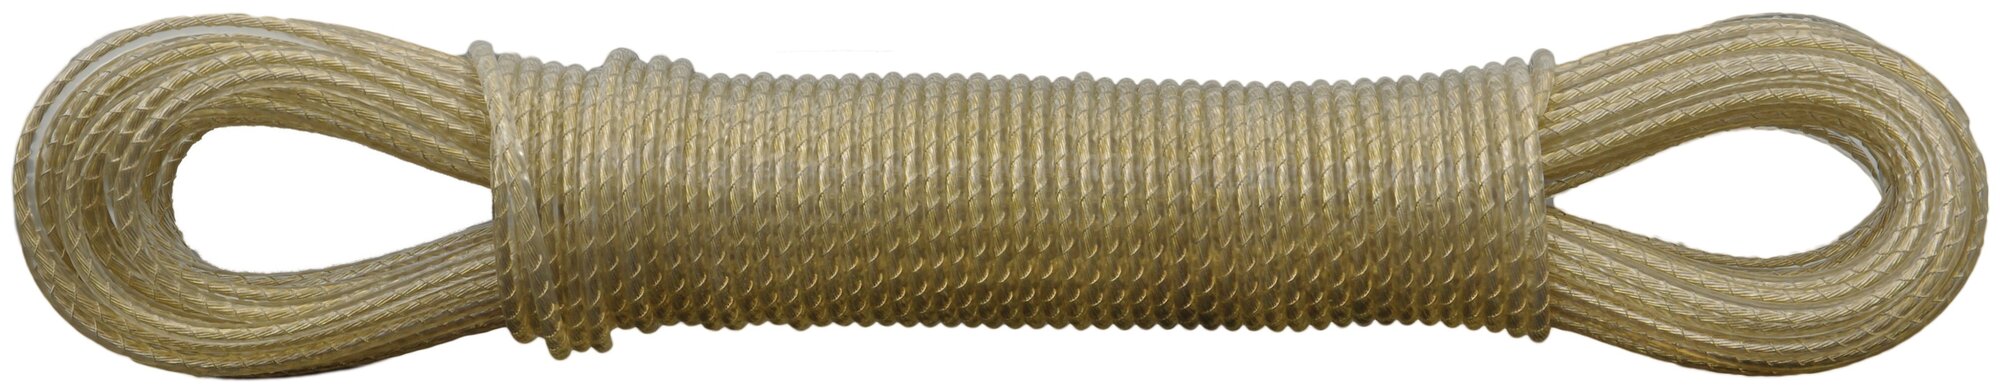 Шнур металлопластиковый 20 м. диаметр 2.5 мм